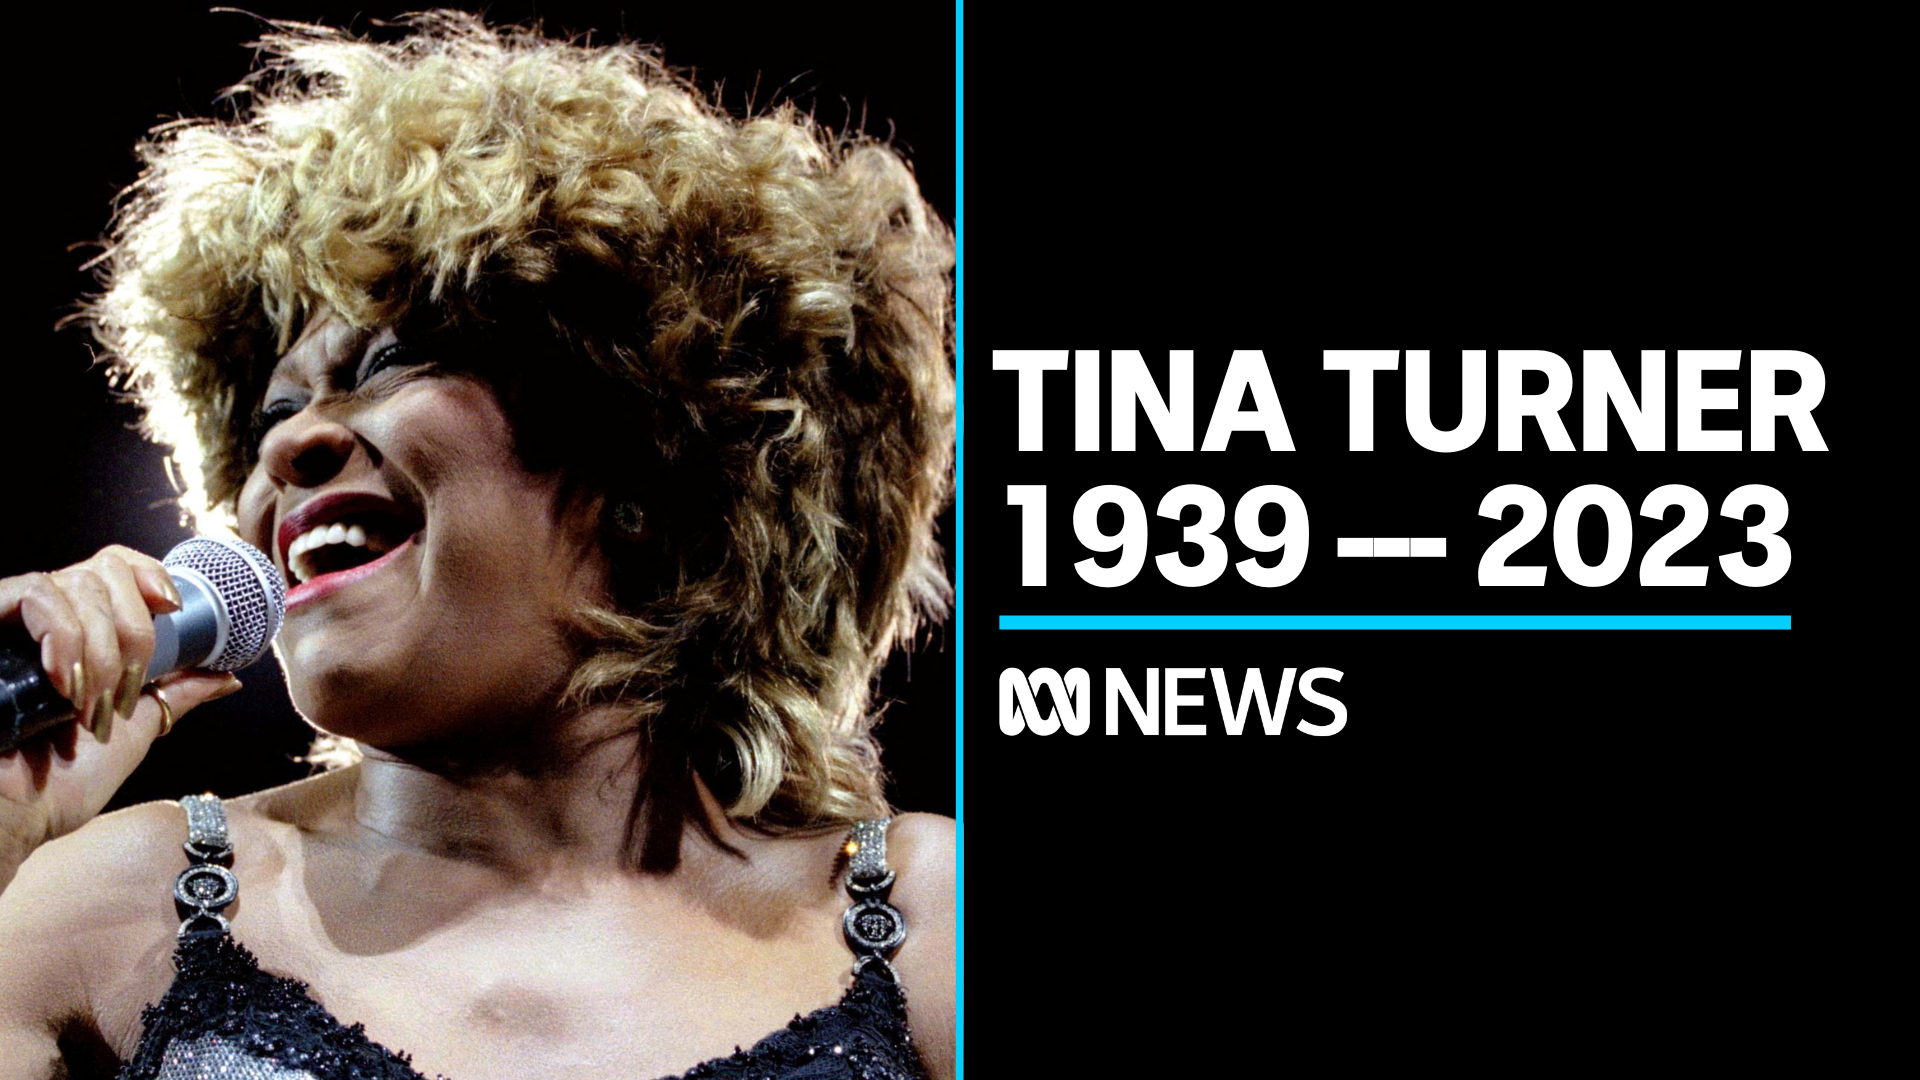 Tina Turner, legendary American singer, dies aged 83 - ABC News